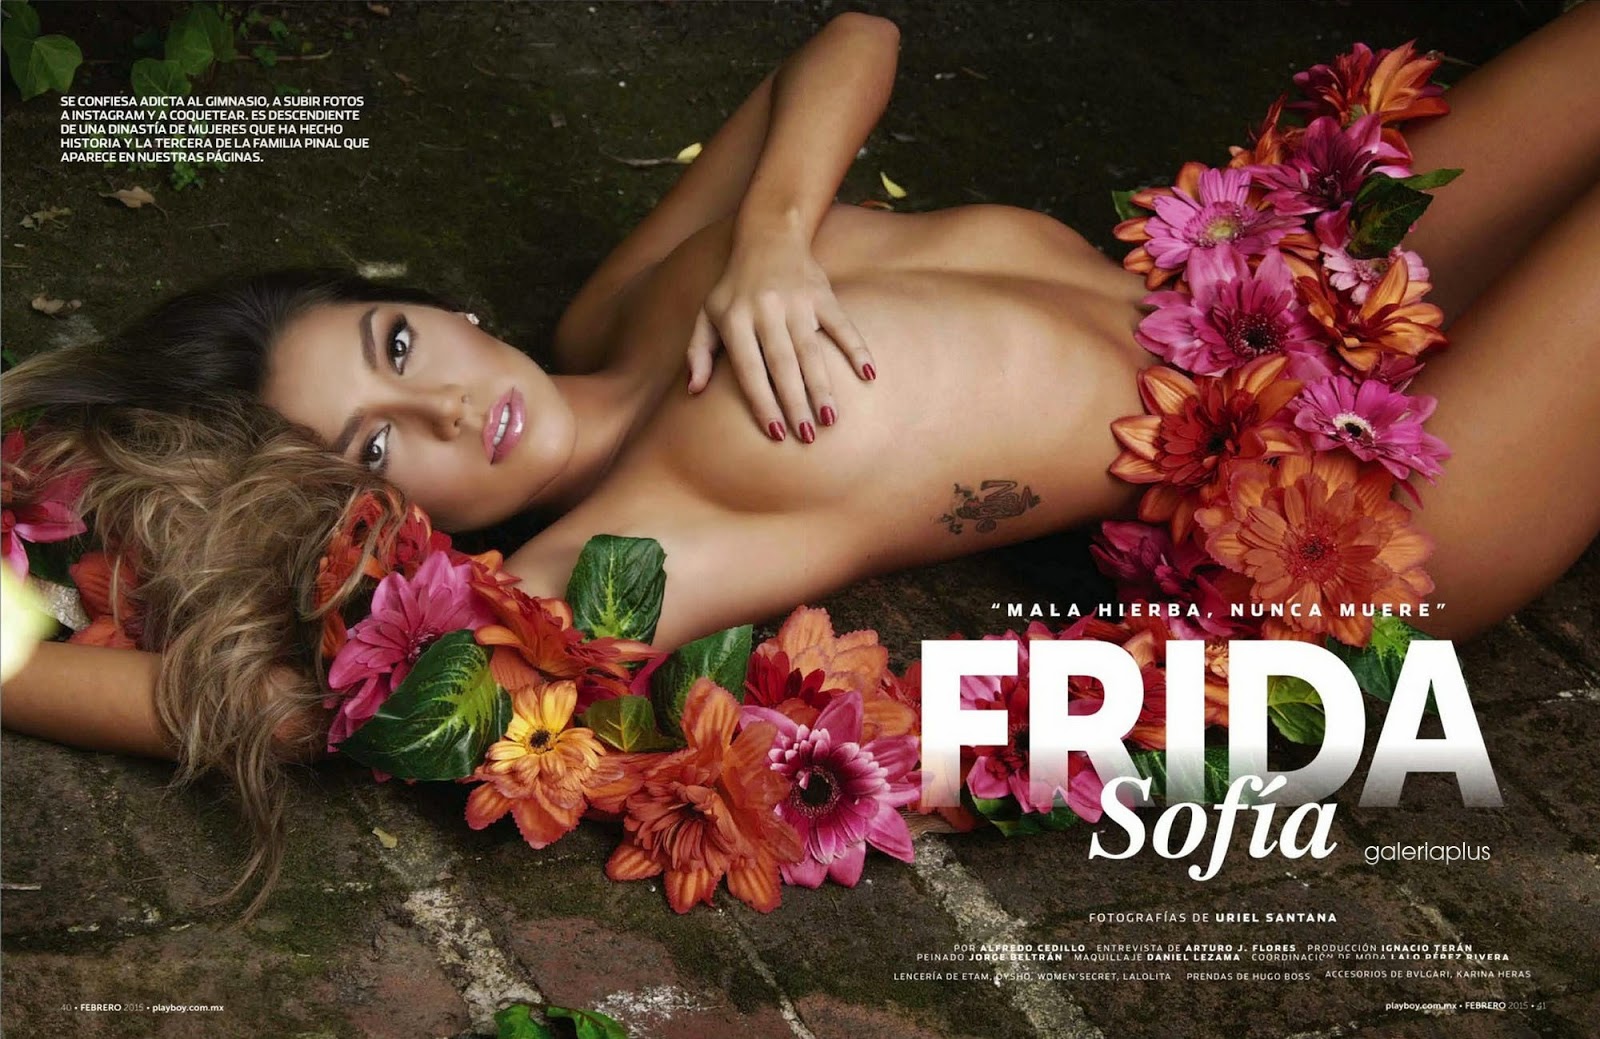 Frida Sofia Guzman desnuda para Playboy.